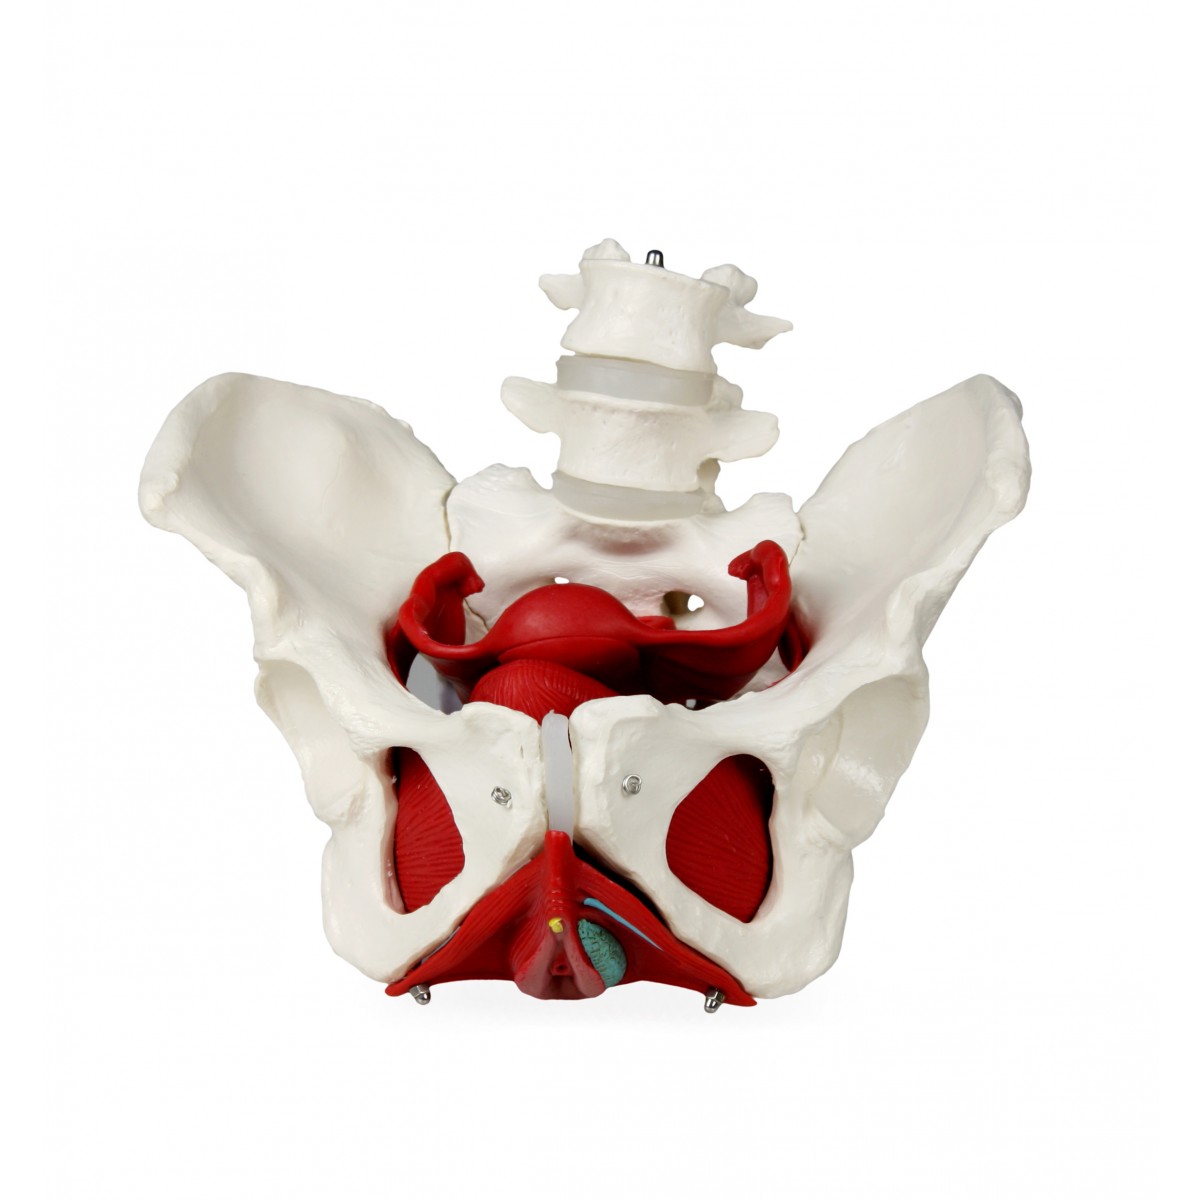 VAP216 Female Pelvic Bones with Organs - Pelvis - Anatomical Models